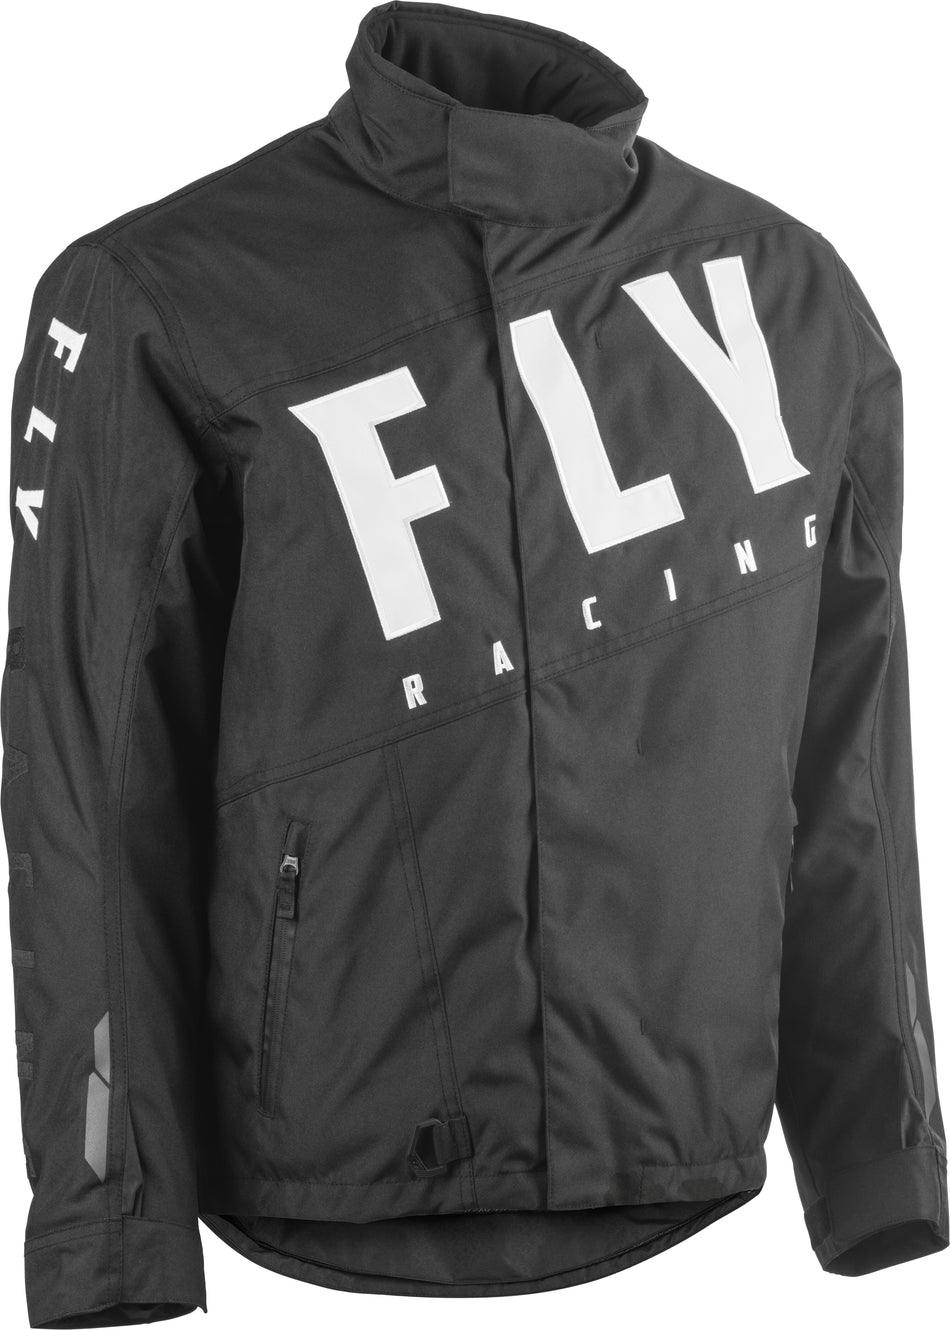 FLY RACING Fly Snx Pro Jacket Black Ys 470-4110YS